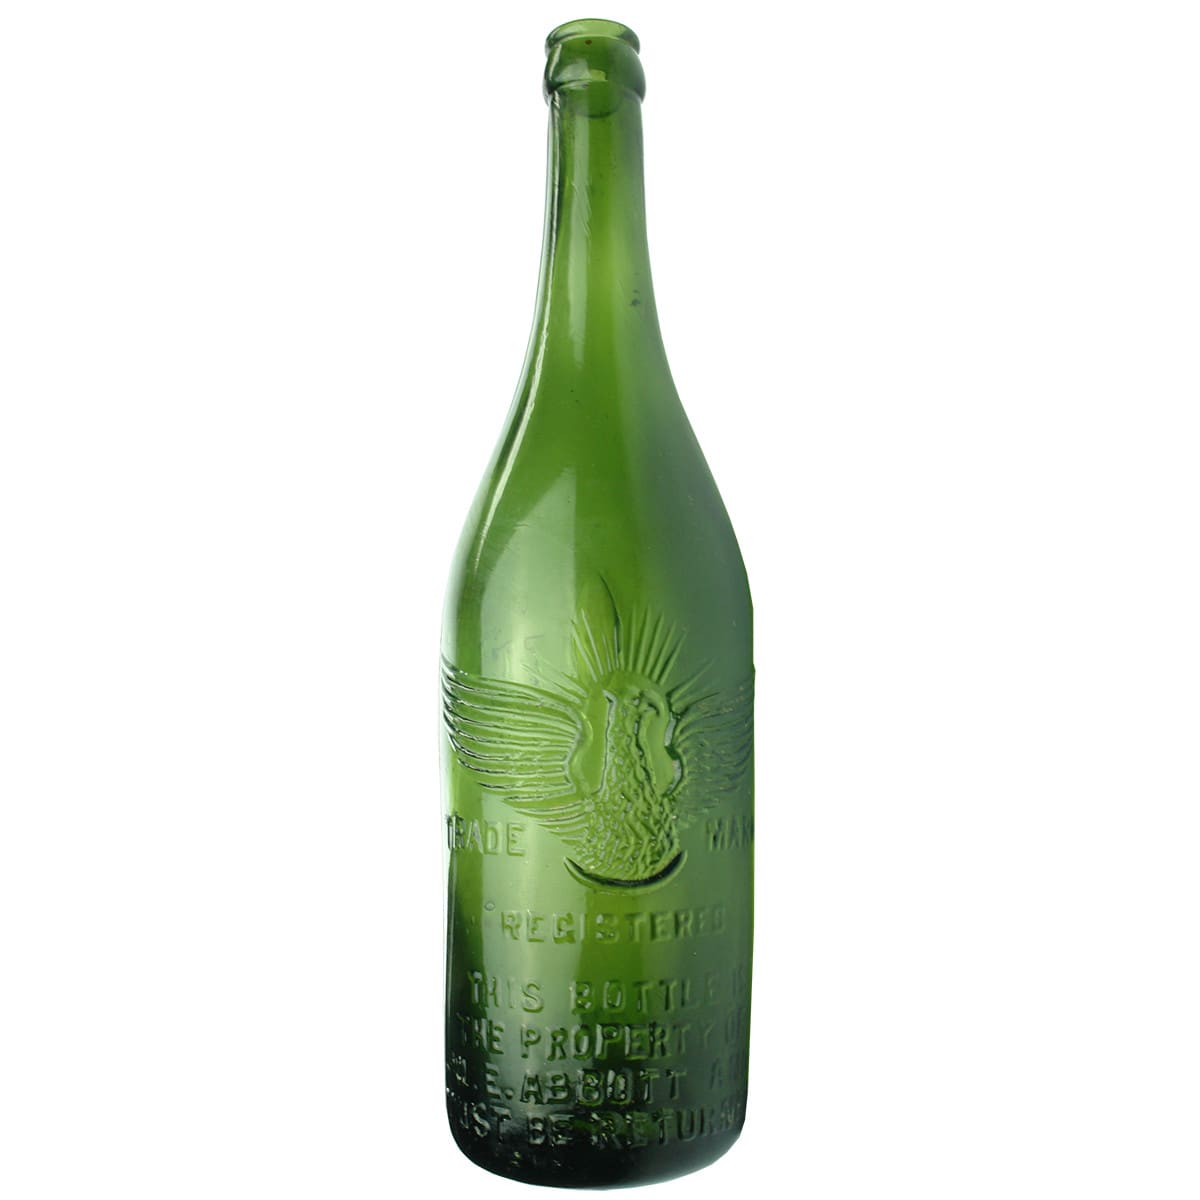 Crown Seal Hop Beer. Abbott's Tasmania. Phoenix. M. E. Abbott. Green. 26 oz. (Tasmania)